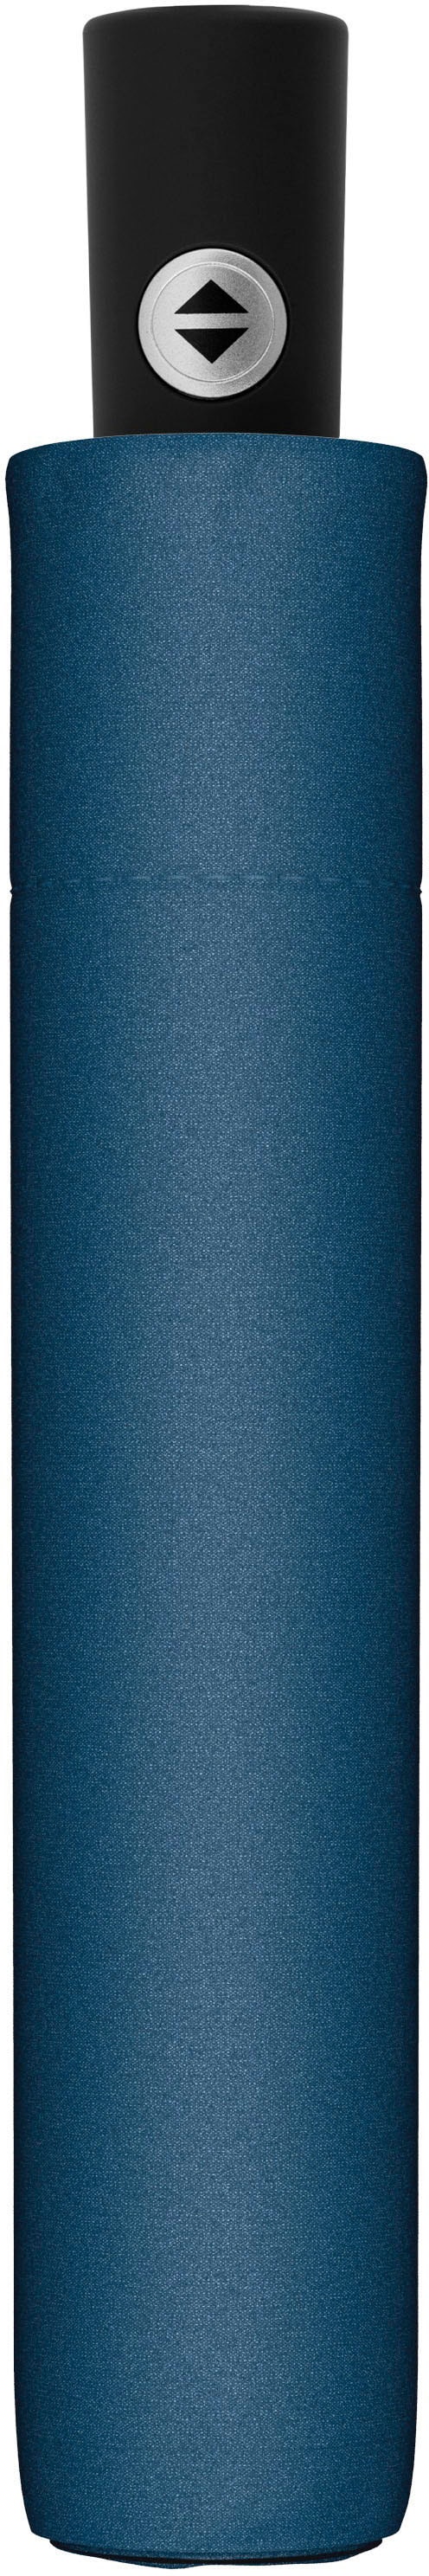 doppler® Taschenregenschirm »Smart fold uni, blue« crystal online bestellen